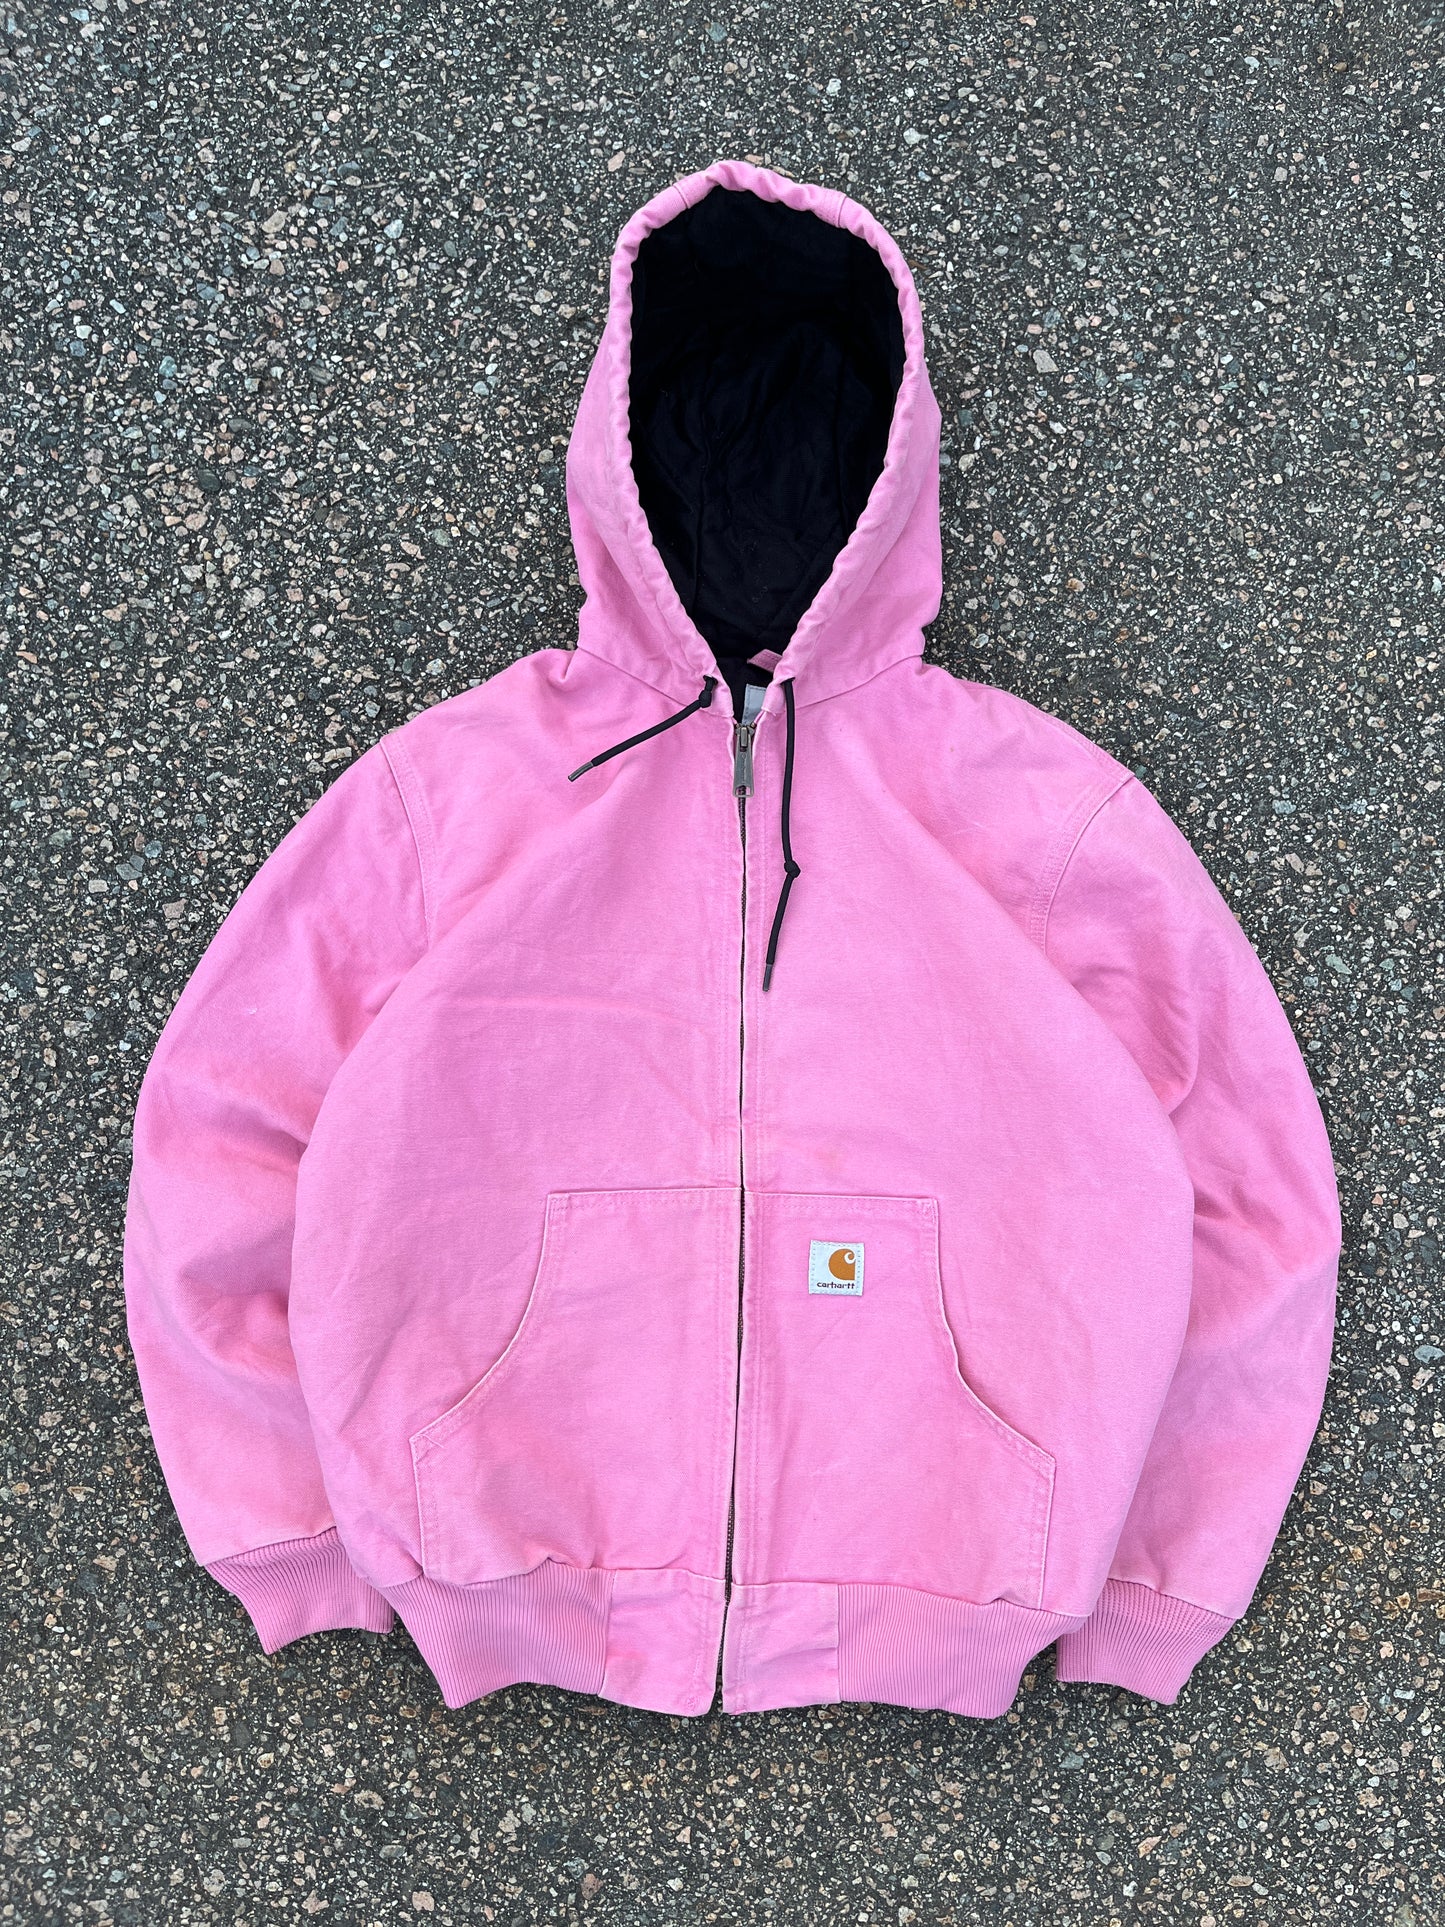 Faded Pastel Pink Carhartt Active Jacket - Medium